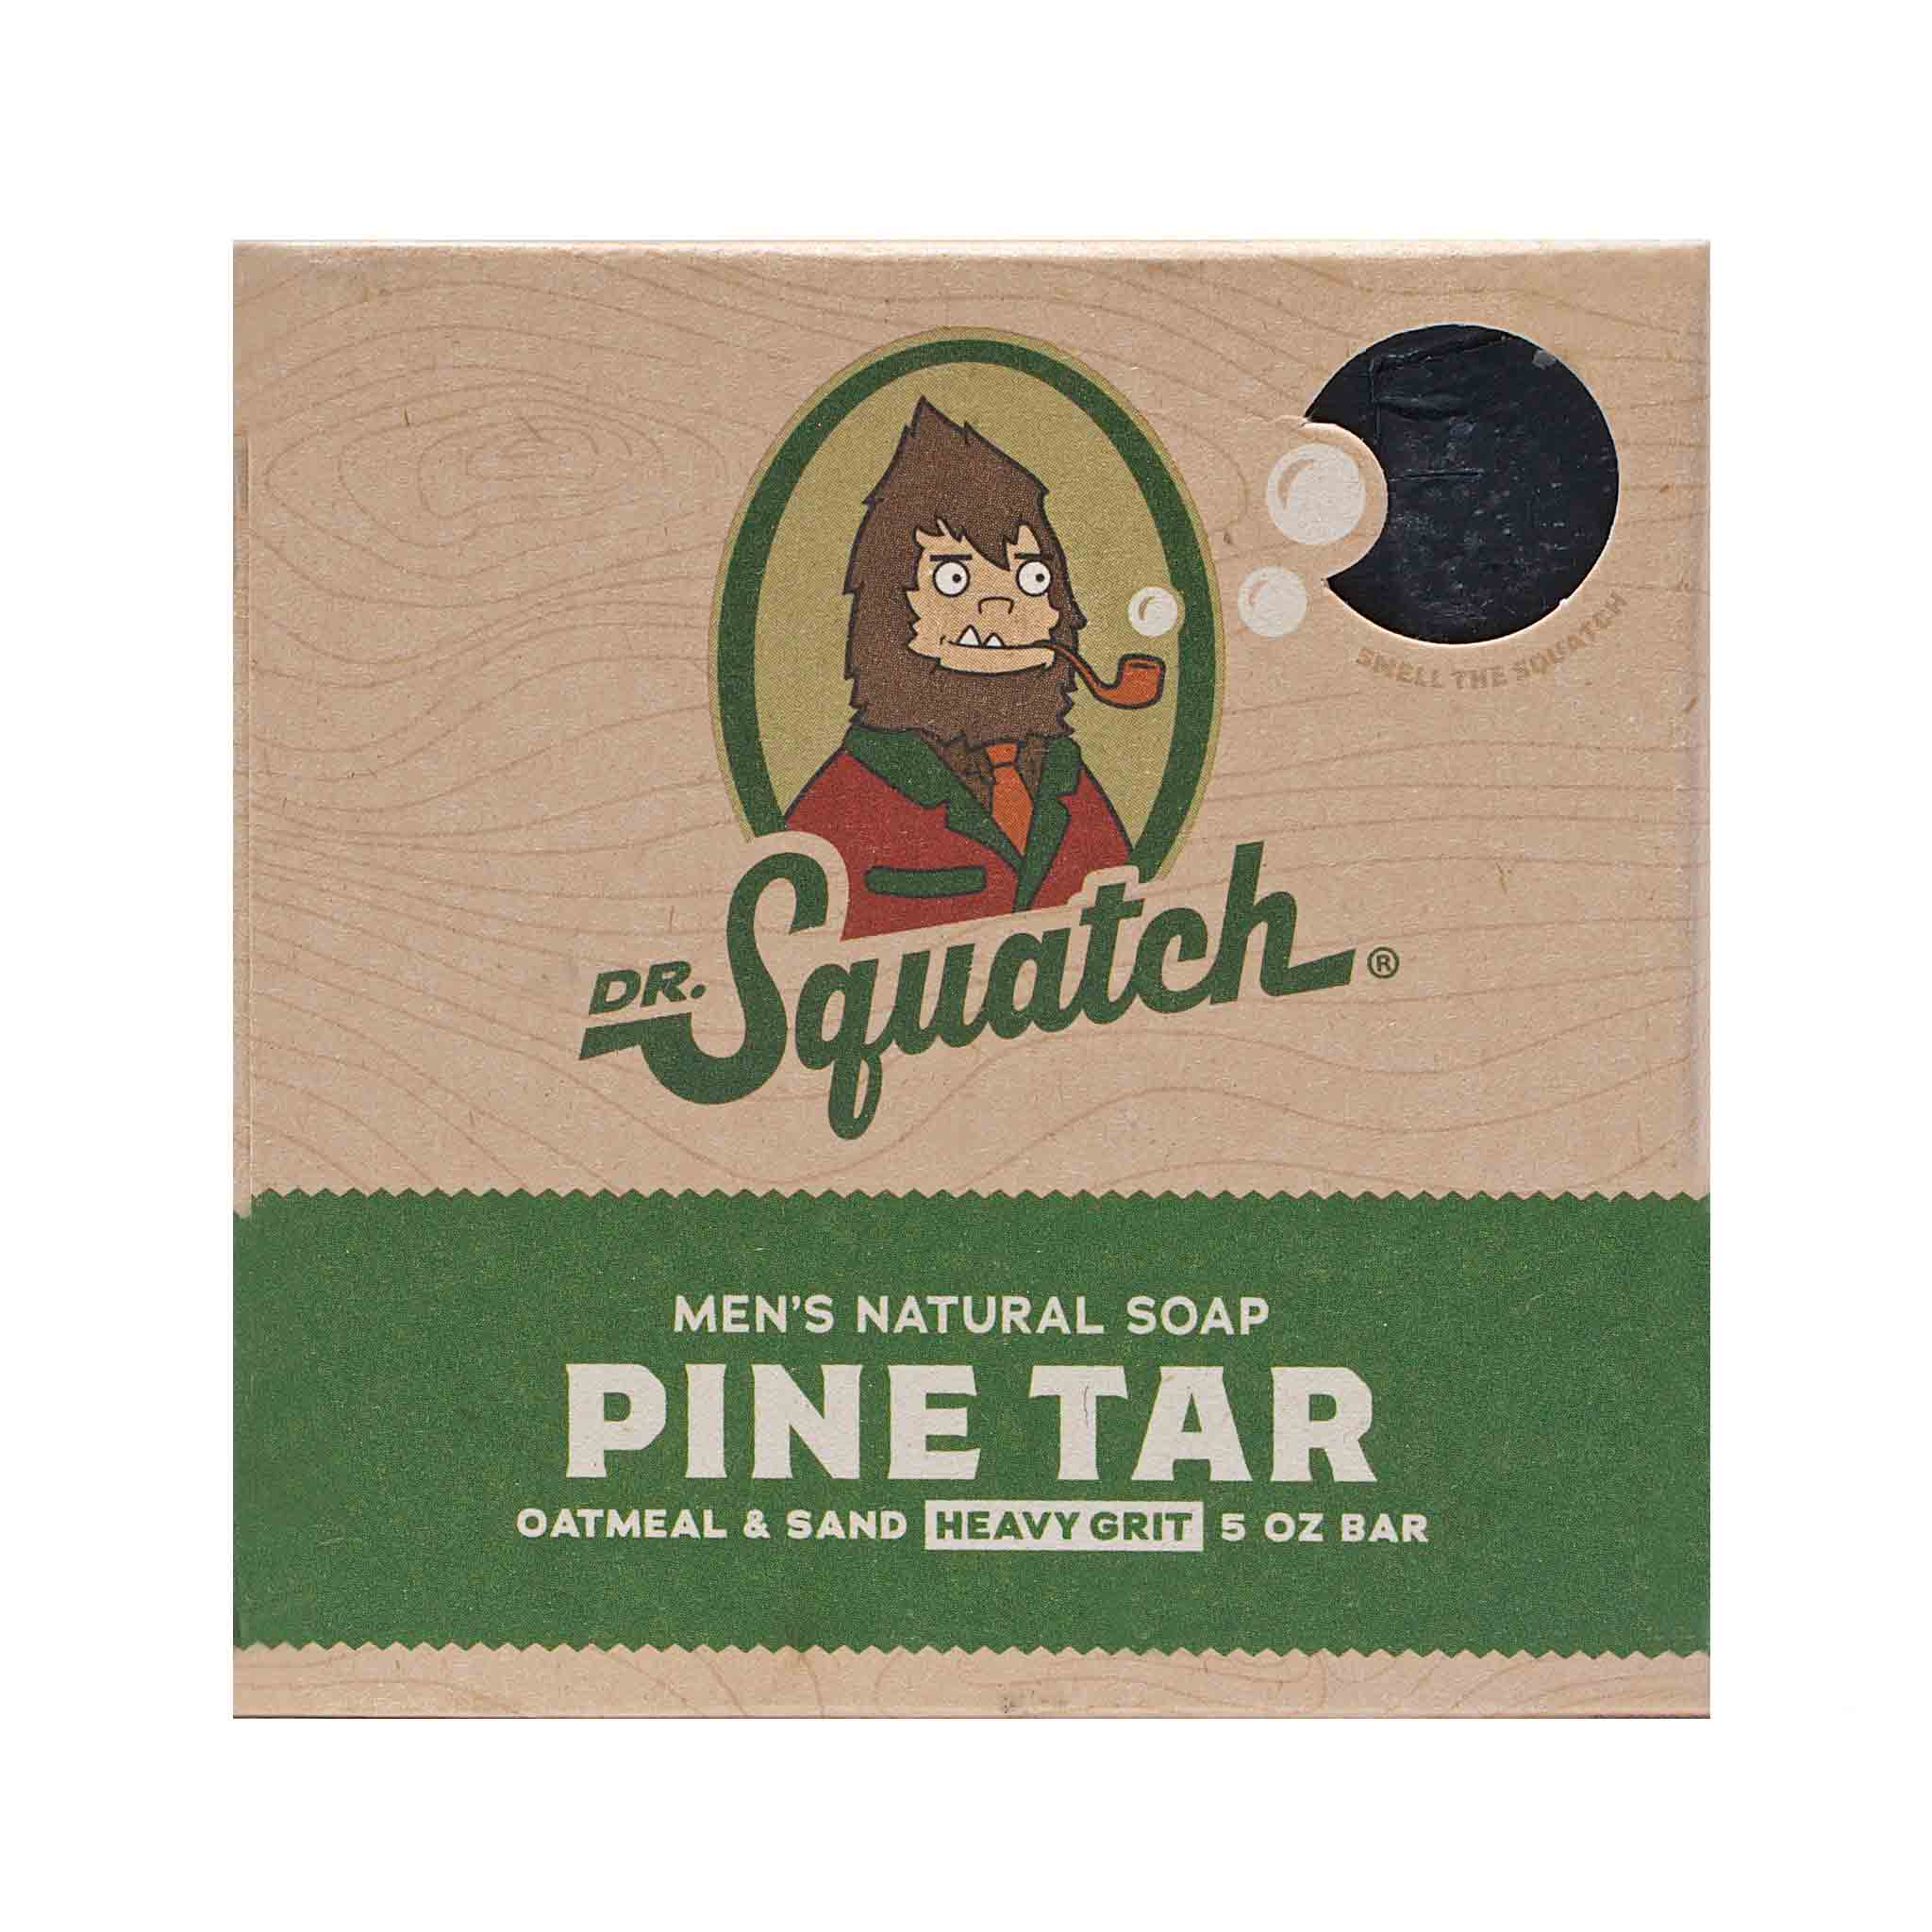 lot of 2 Dr. Squatch Men's Natural Bar Soap - Pine Tar